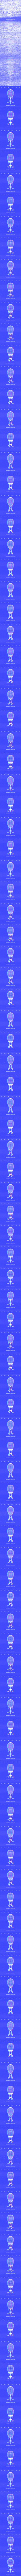 Fabergé Egg: Vector (VHS)